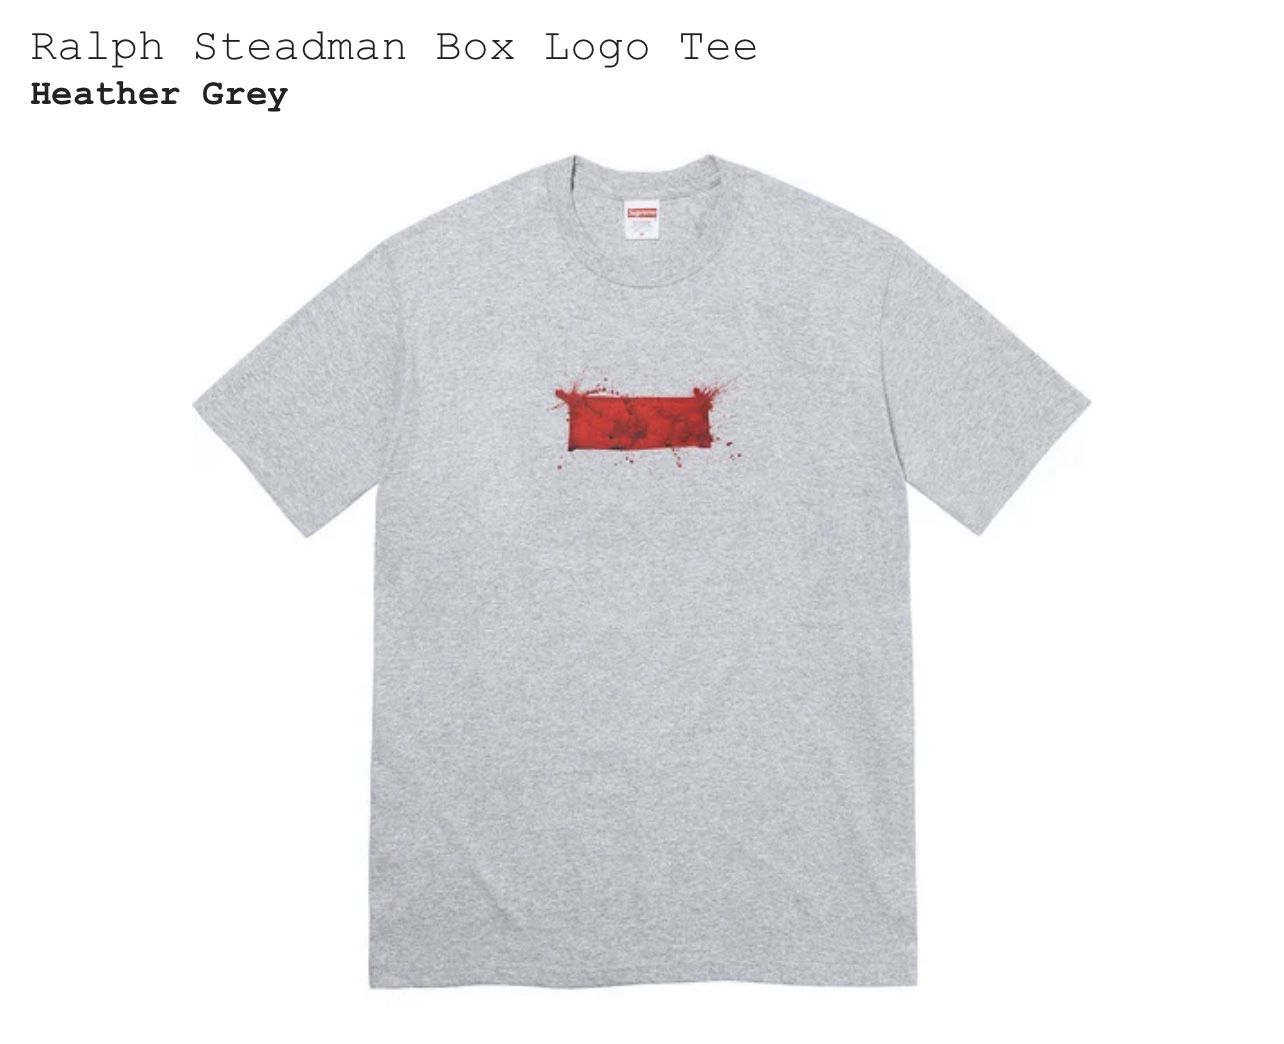 Supreme Ralph Steadman Box Logo Tee - GRAY - SIZE M - Order Confirmed